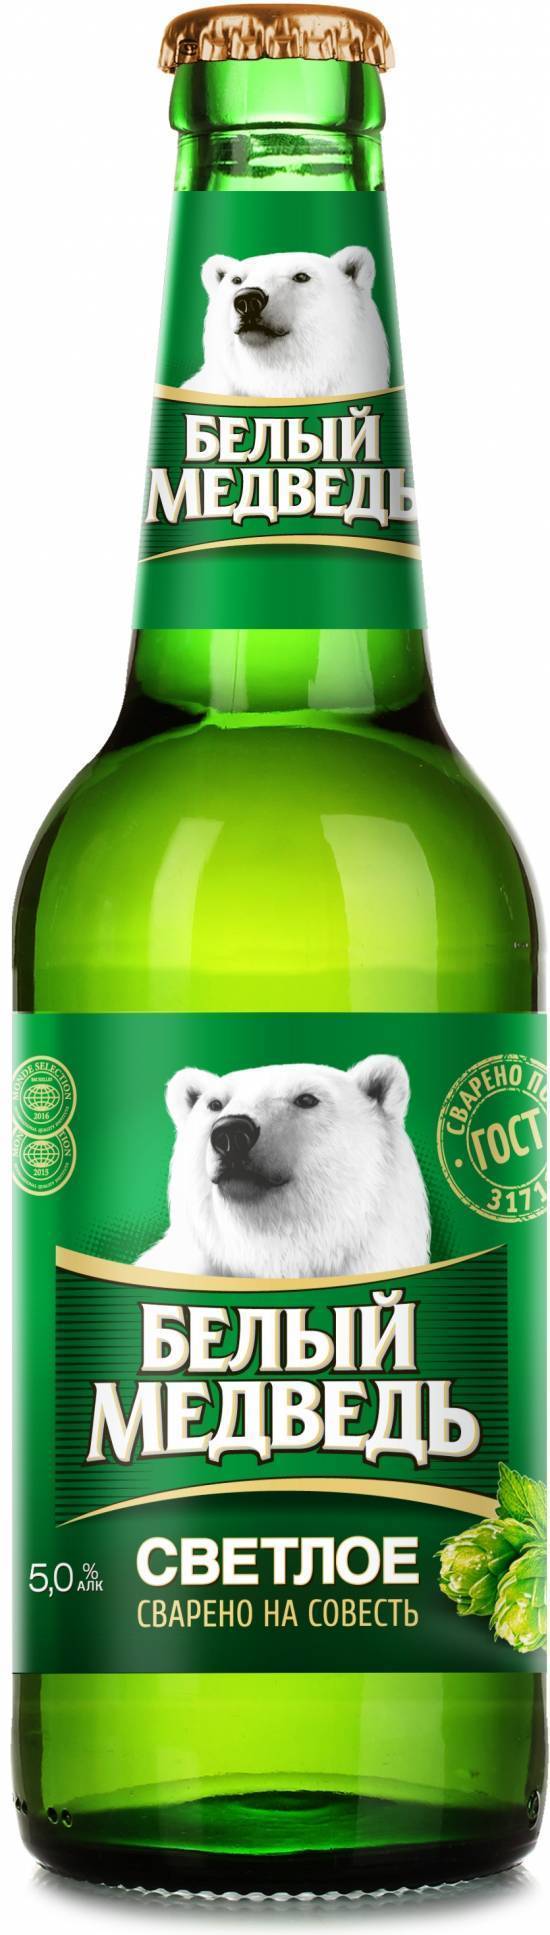 Пиво три медведя: описание, история и виды марки